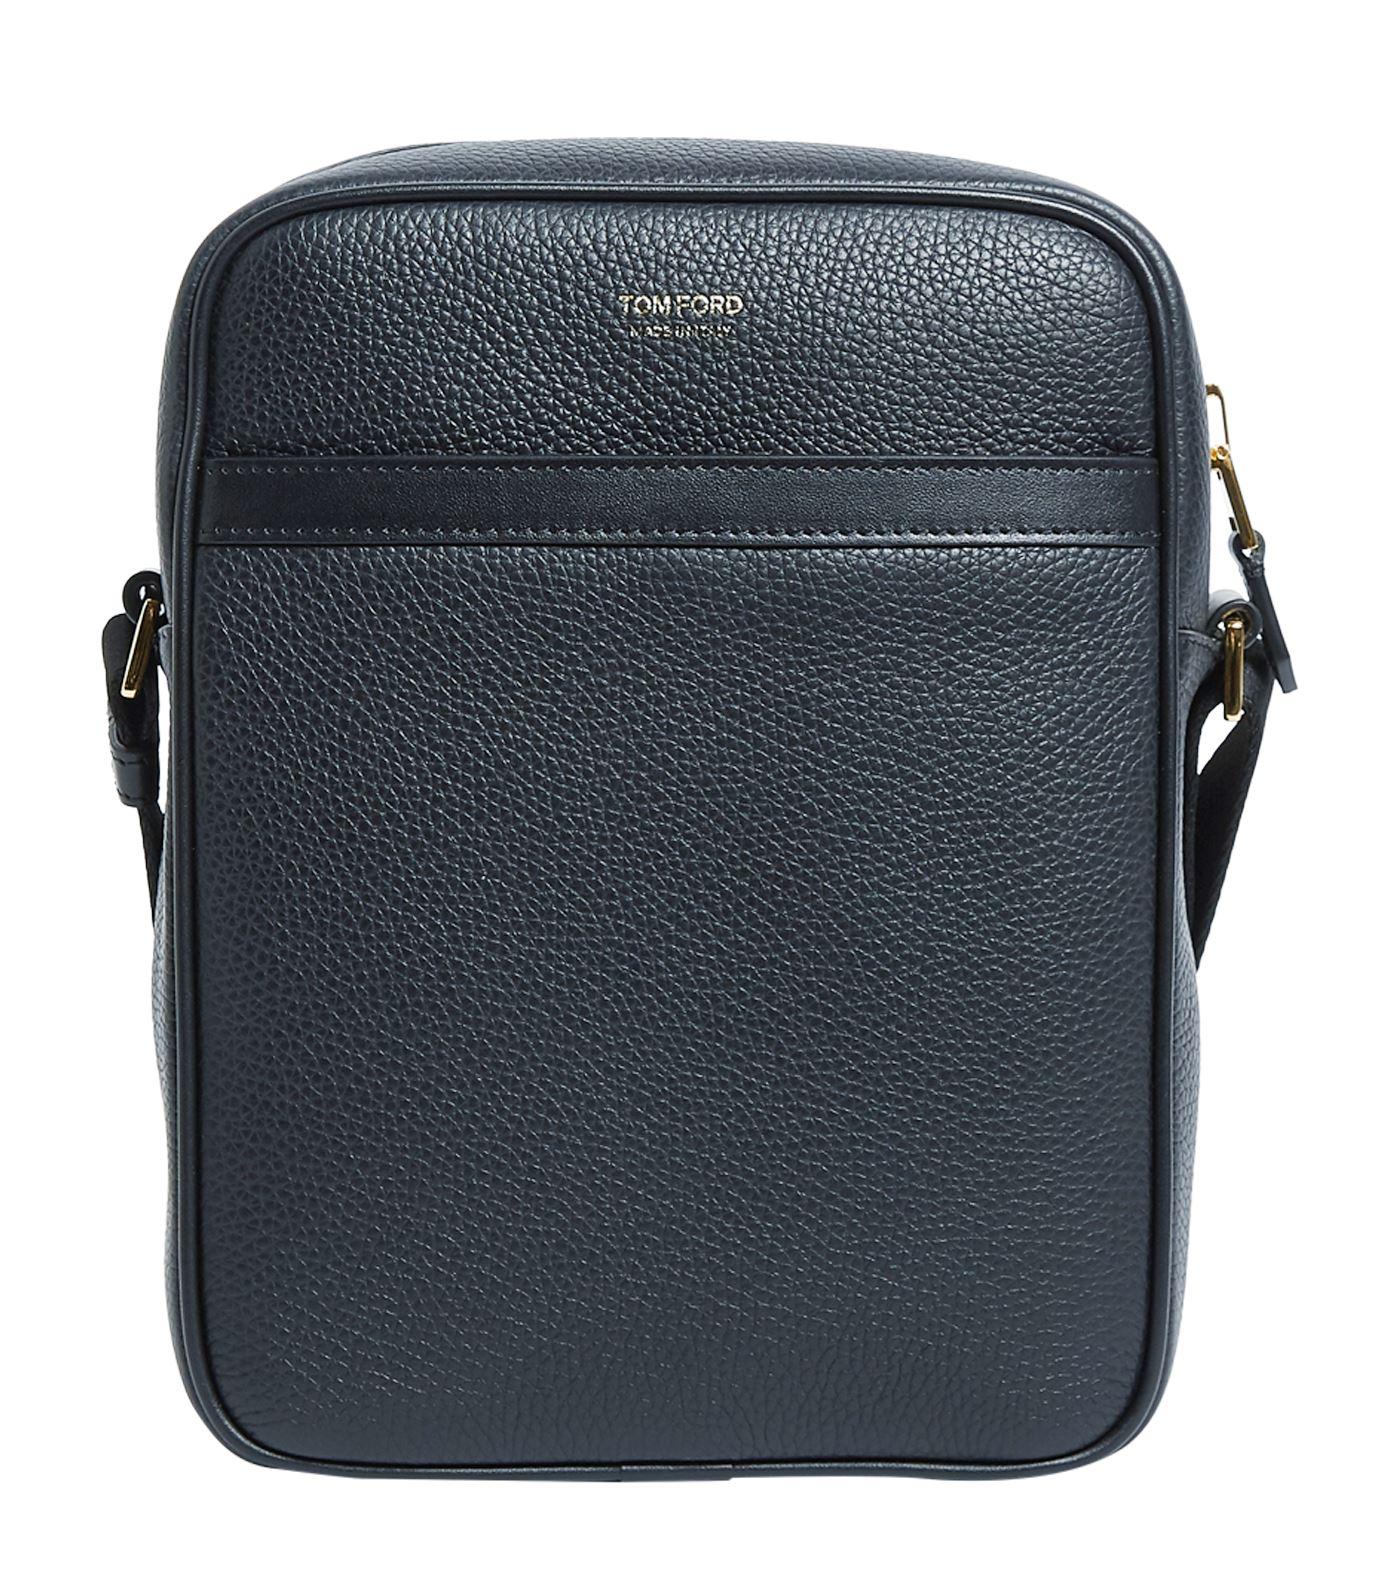 Tom Ford Small Leather Messenger Bag in Black for Men - Lyst